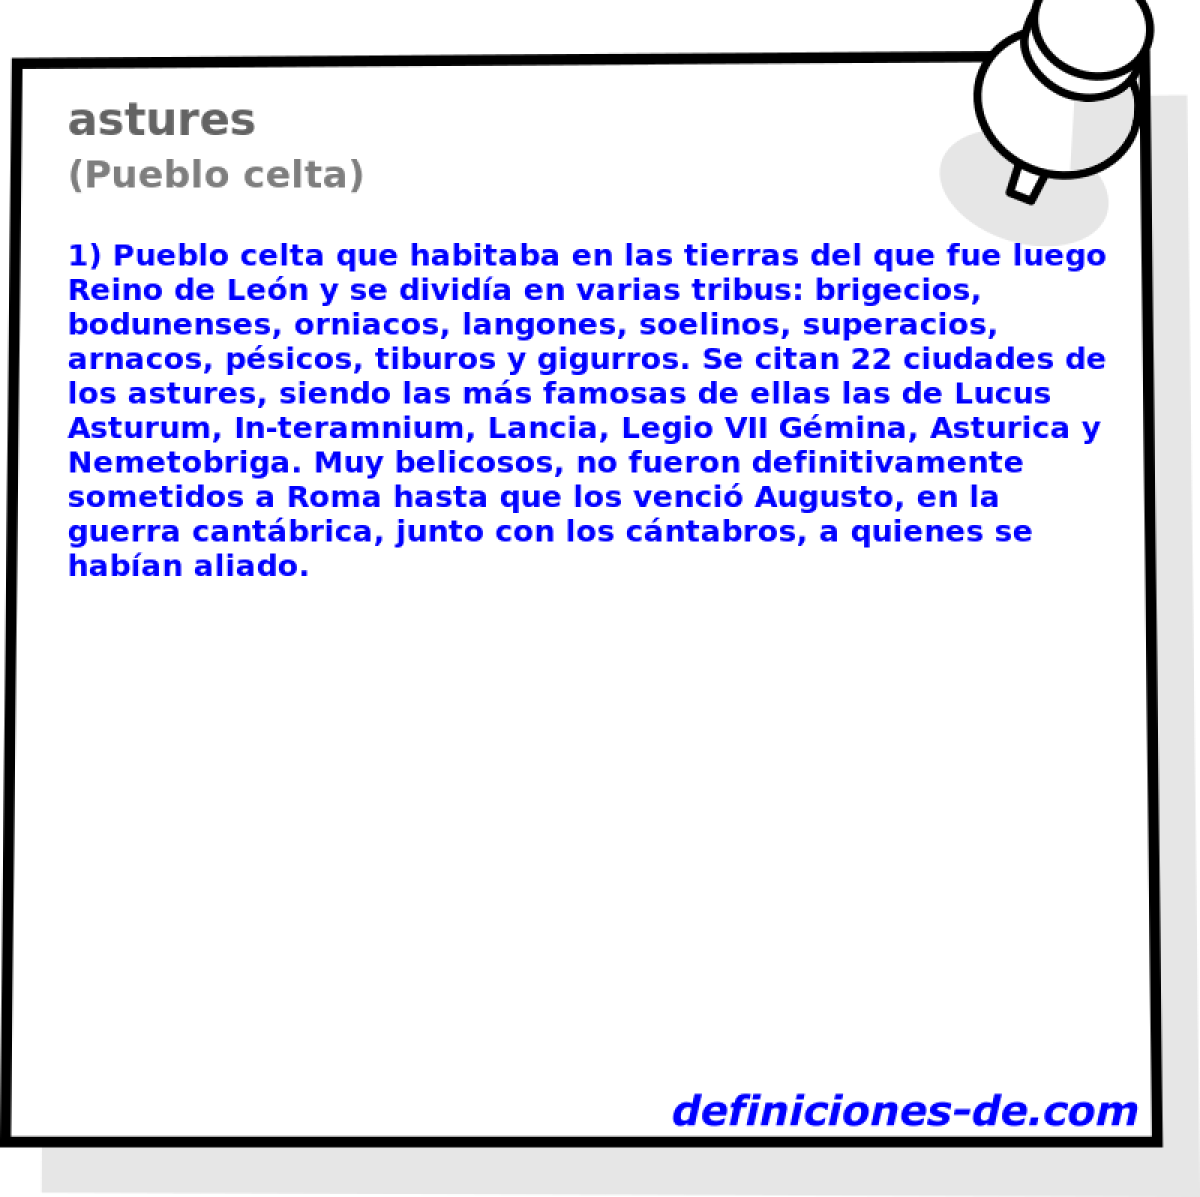 astures (Pueblo celta)